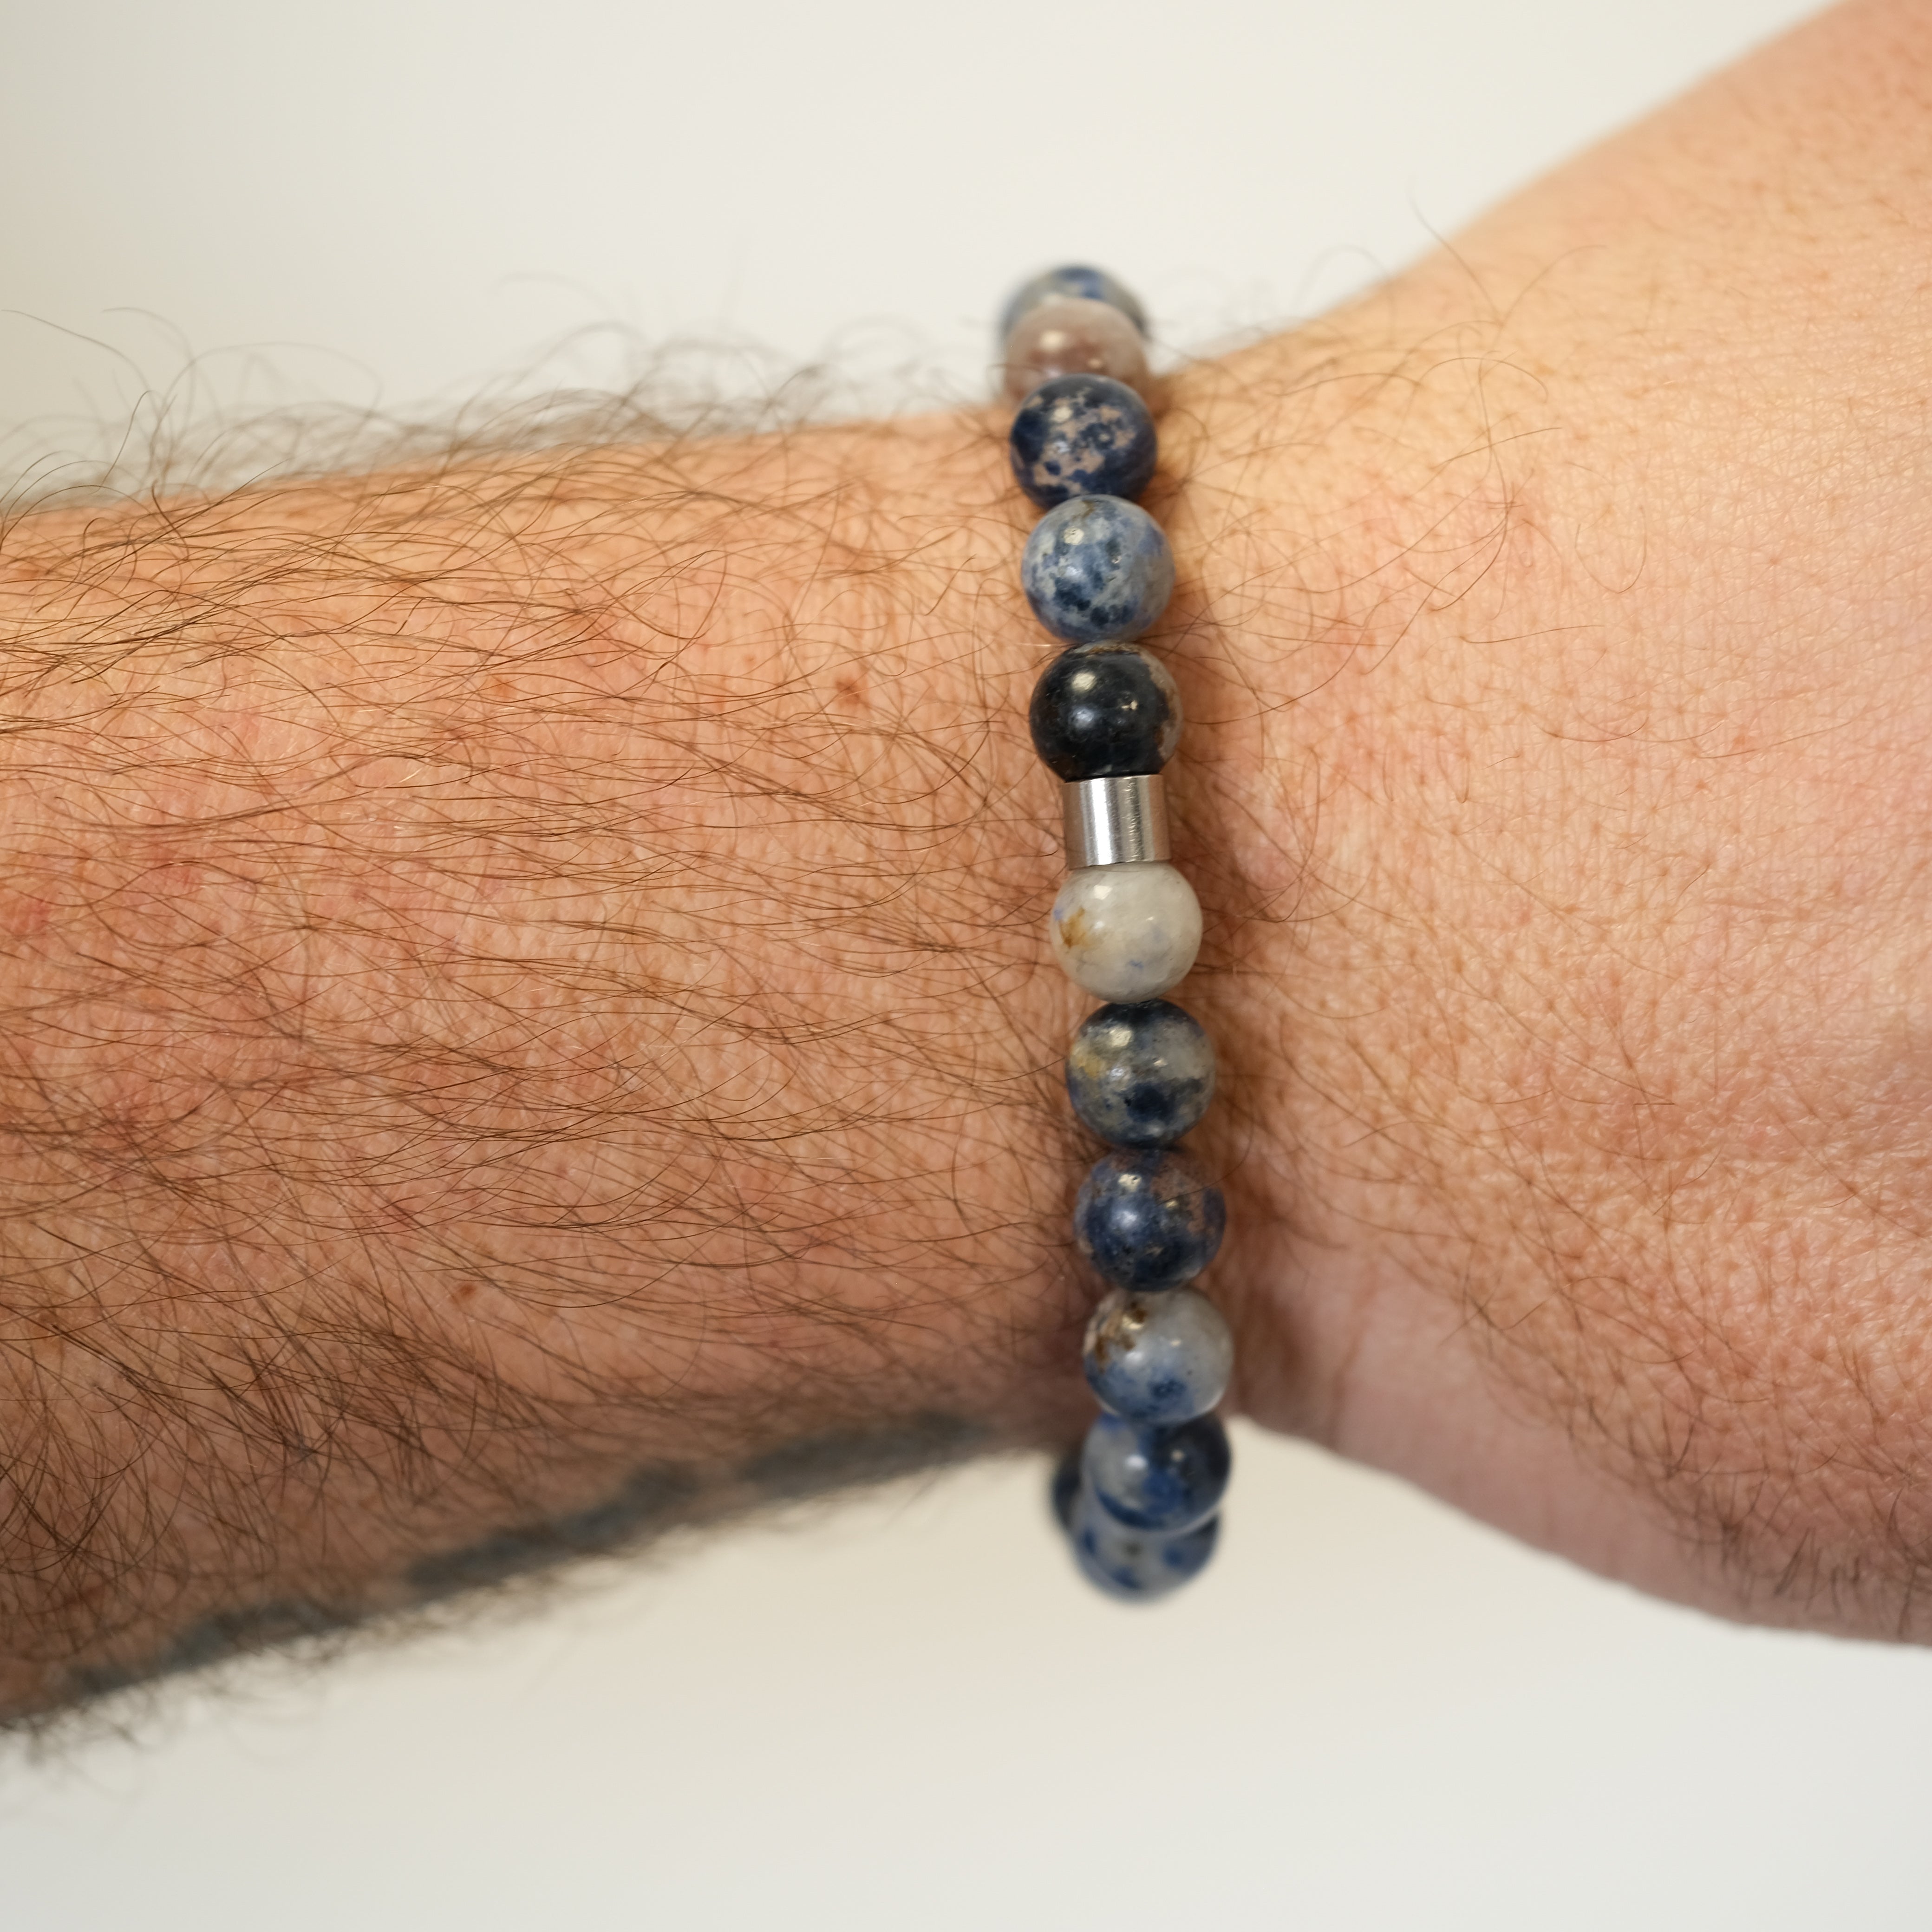 Pegmatite gemstone bracelet worn on a model's wrist from behind